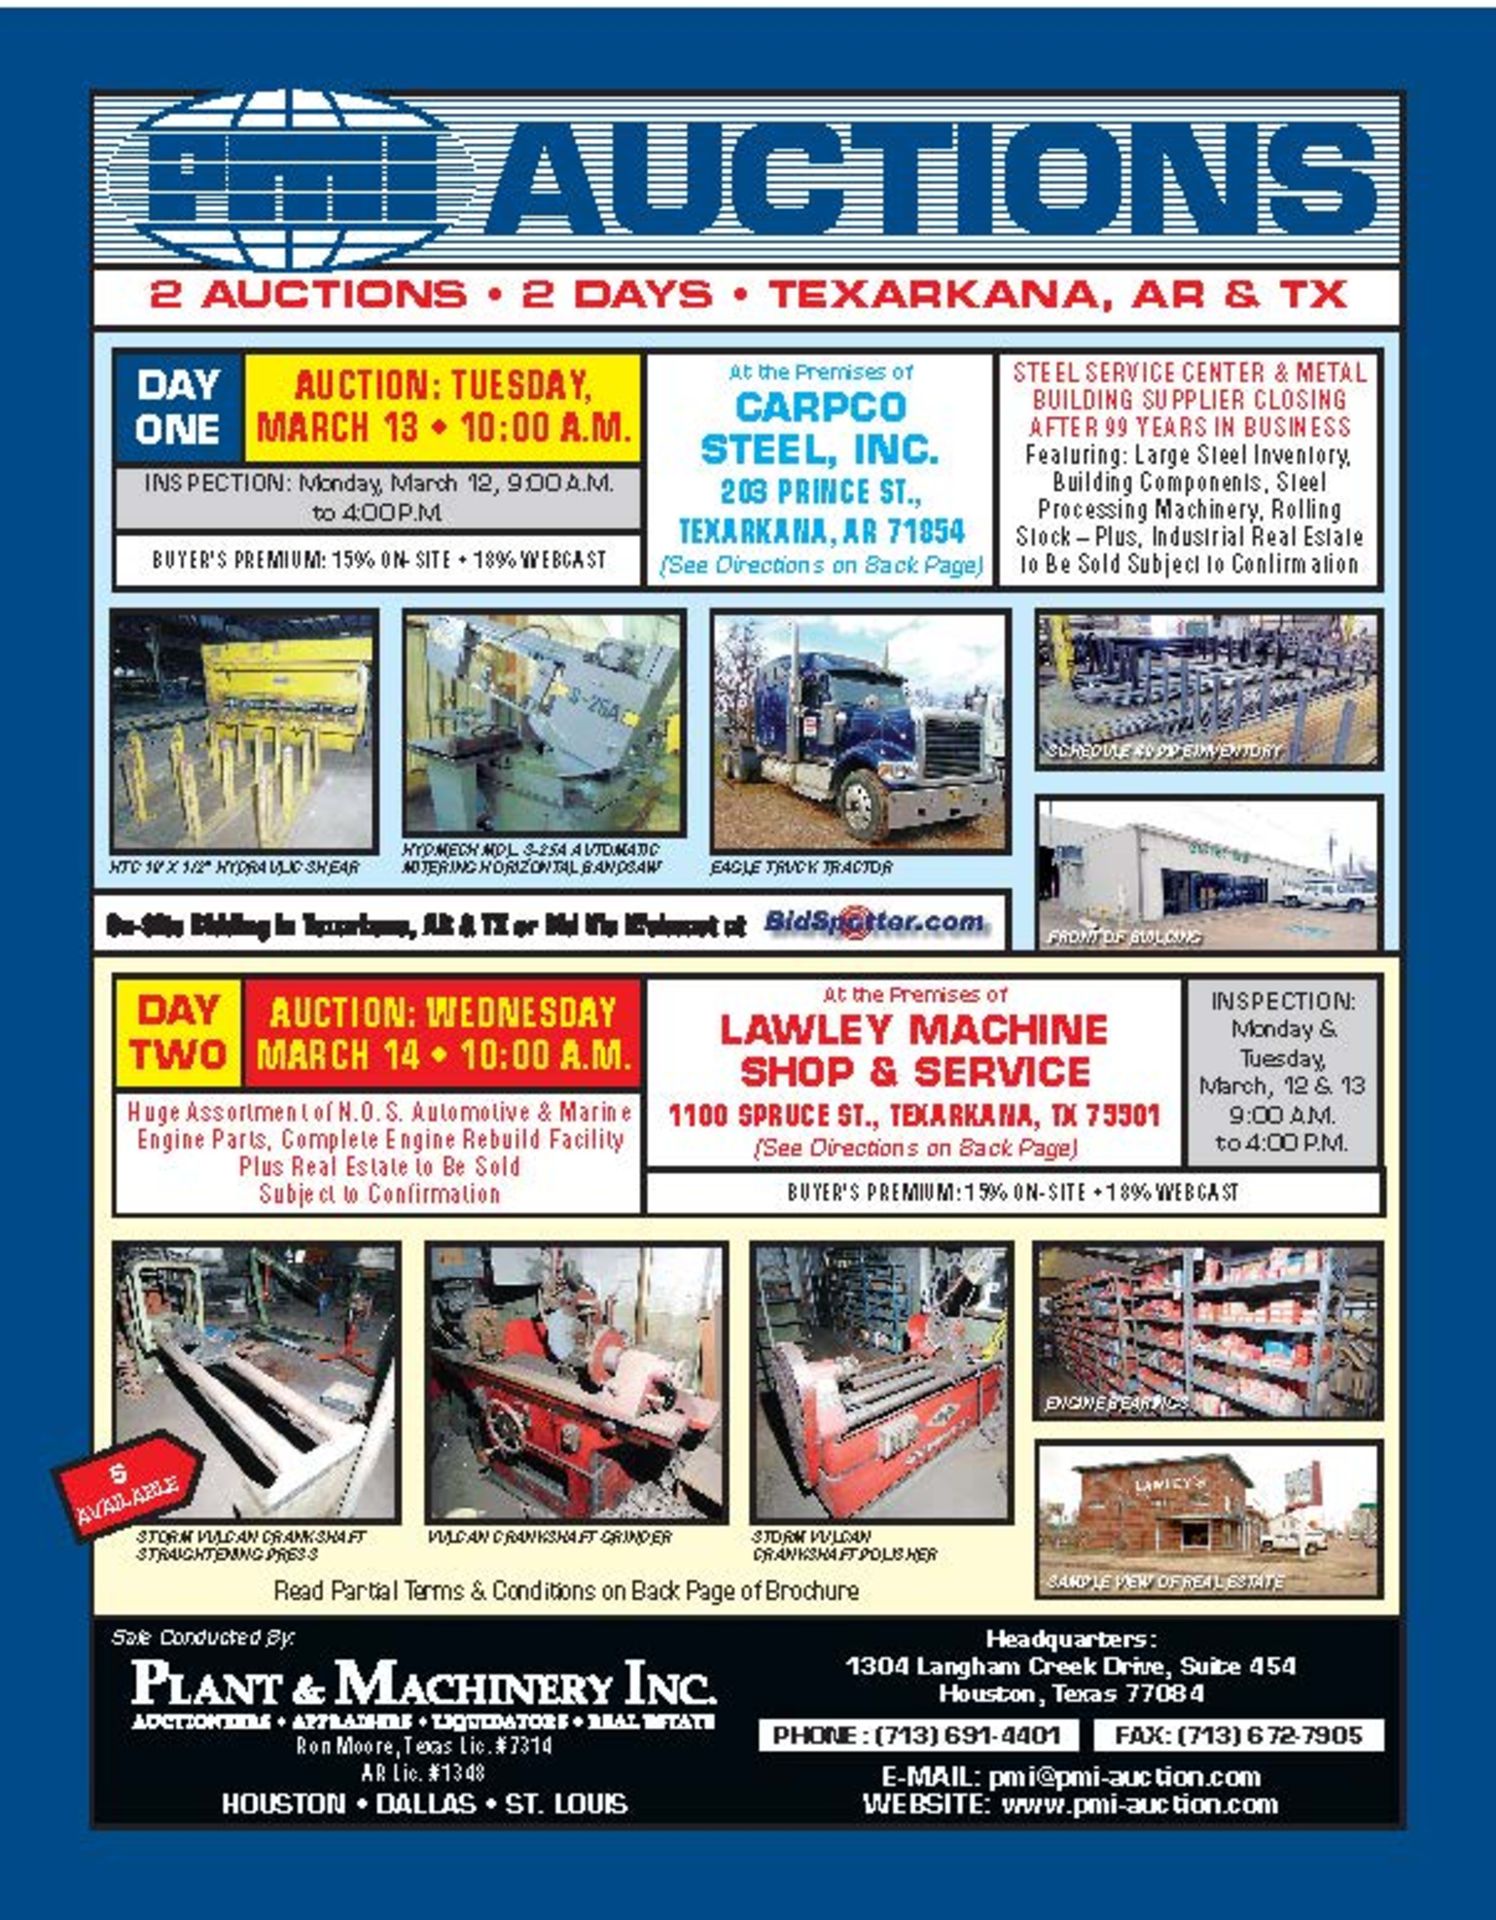 Lawley Machine Shop & Service - Image 2 of 4